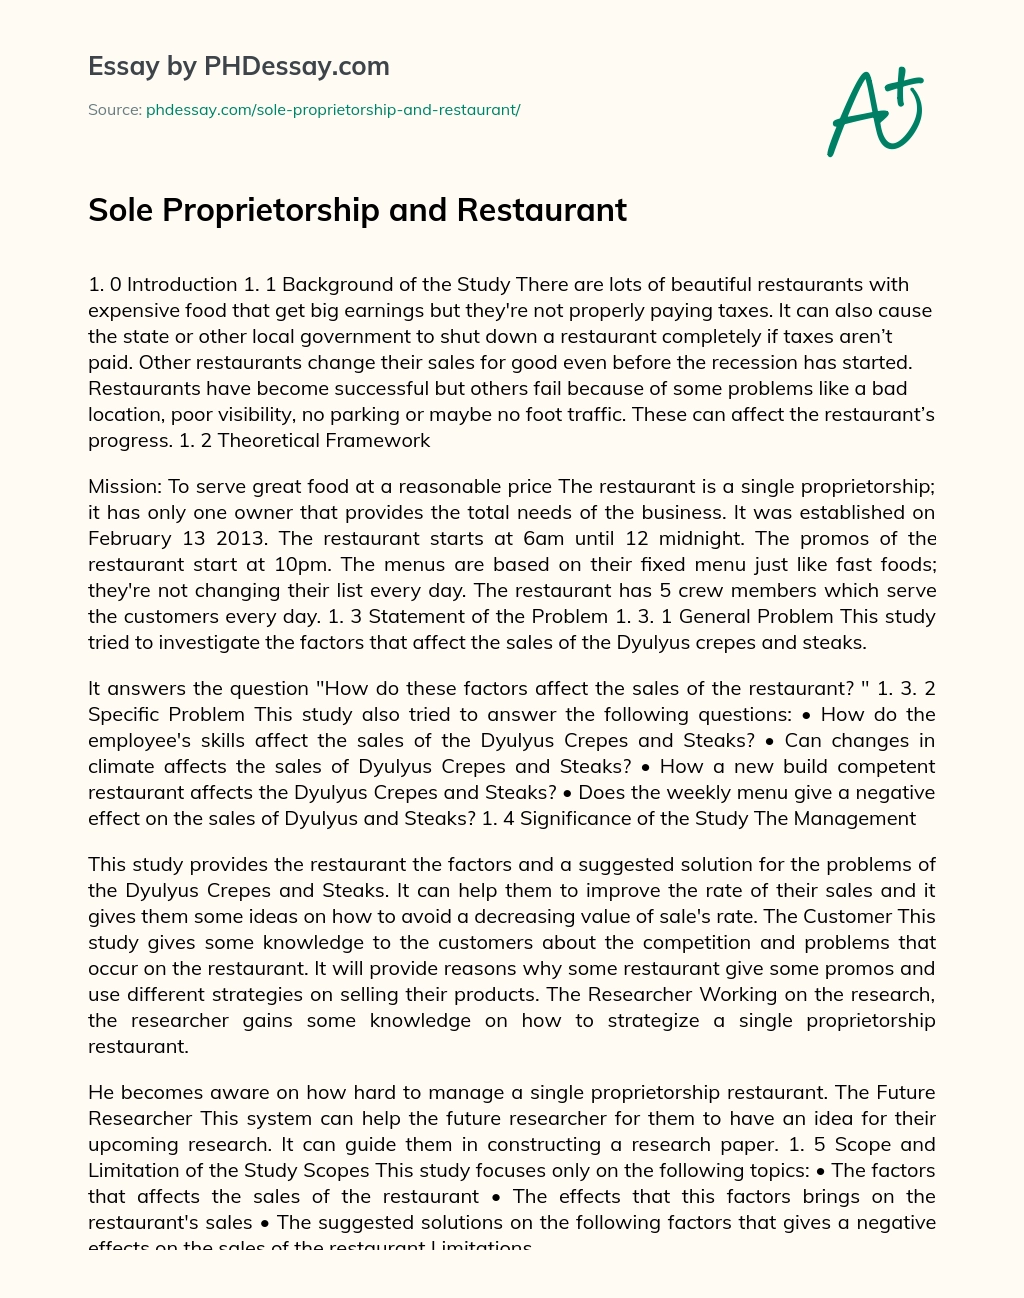 Sole Proprietorship and Restaurant essay